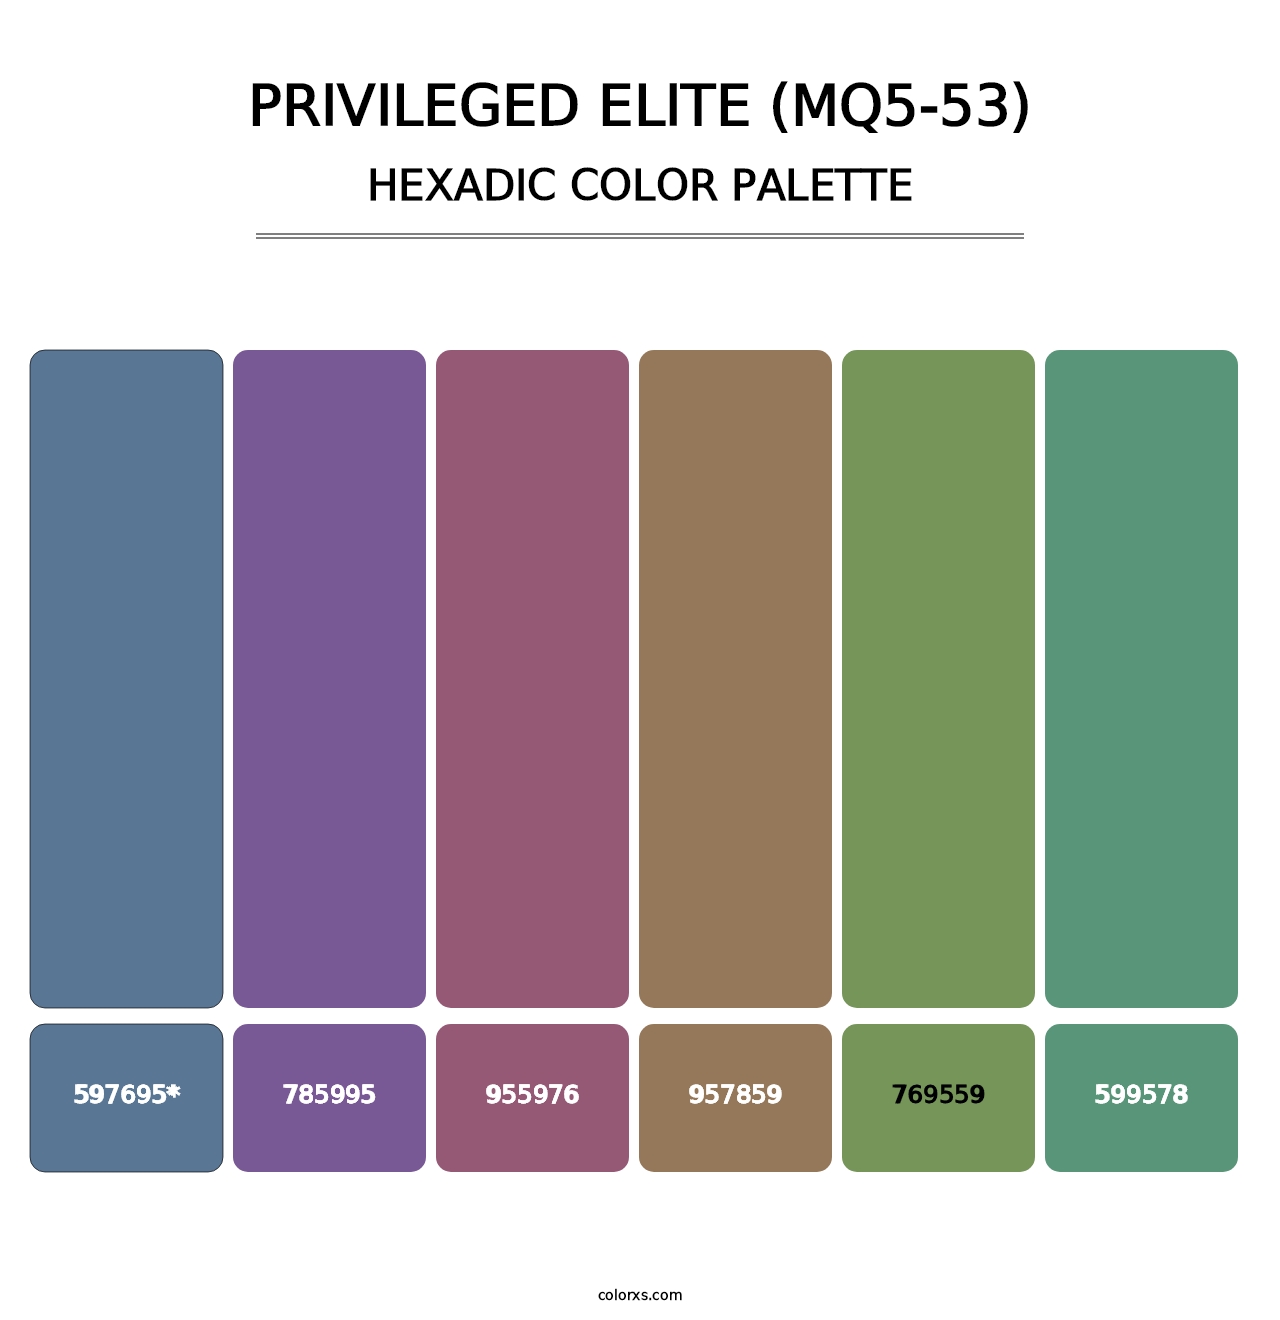 Privileged Elite (MQ5-53) - Hexadic Color Palette